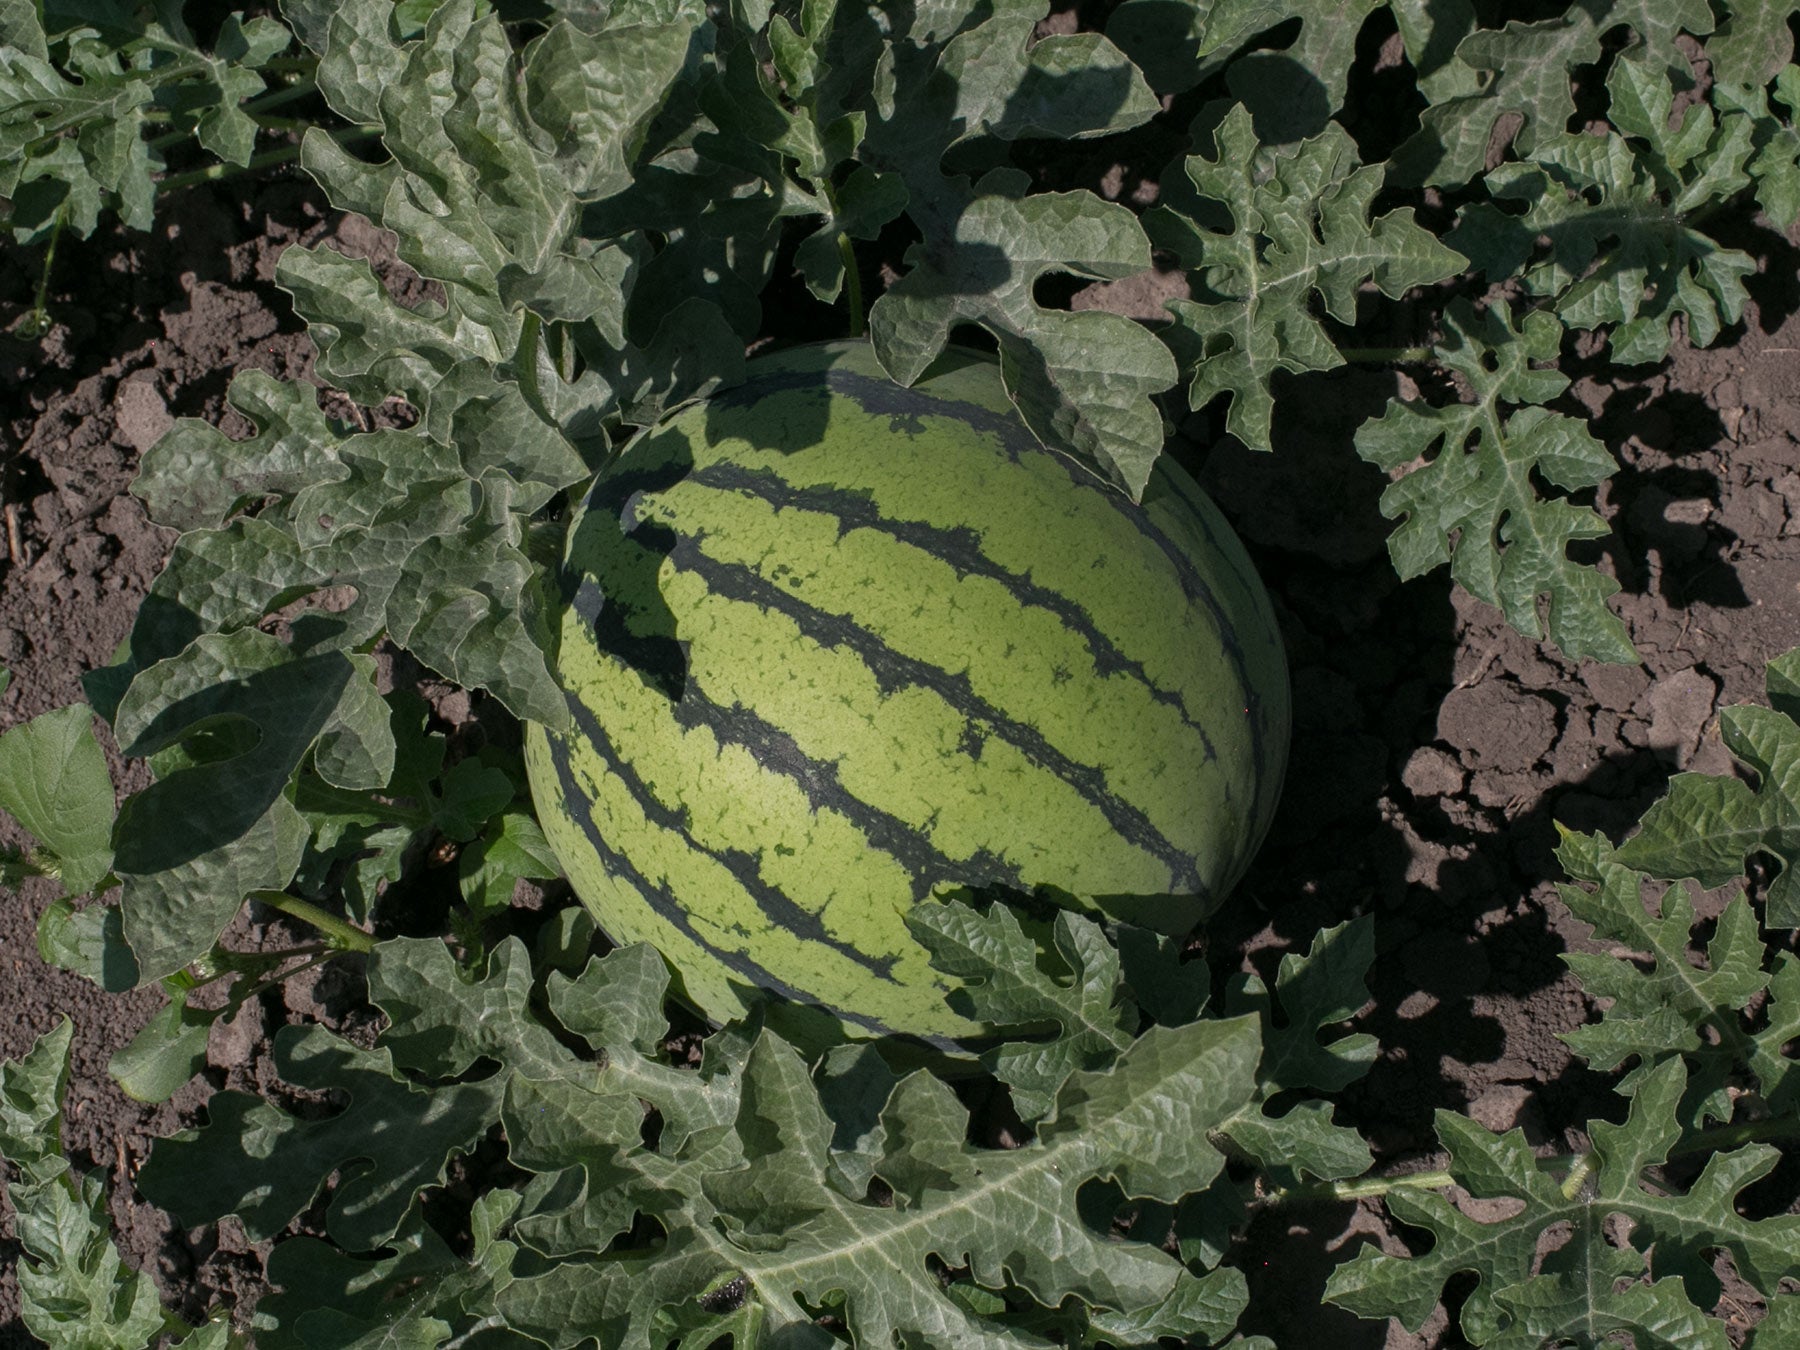 Watermelon - Cream of Saskatchewan